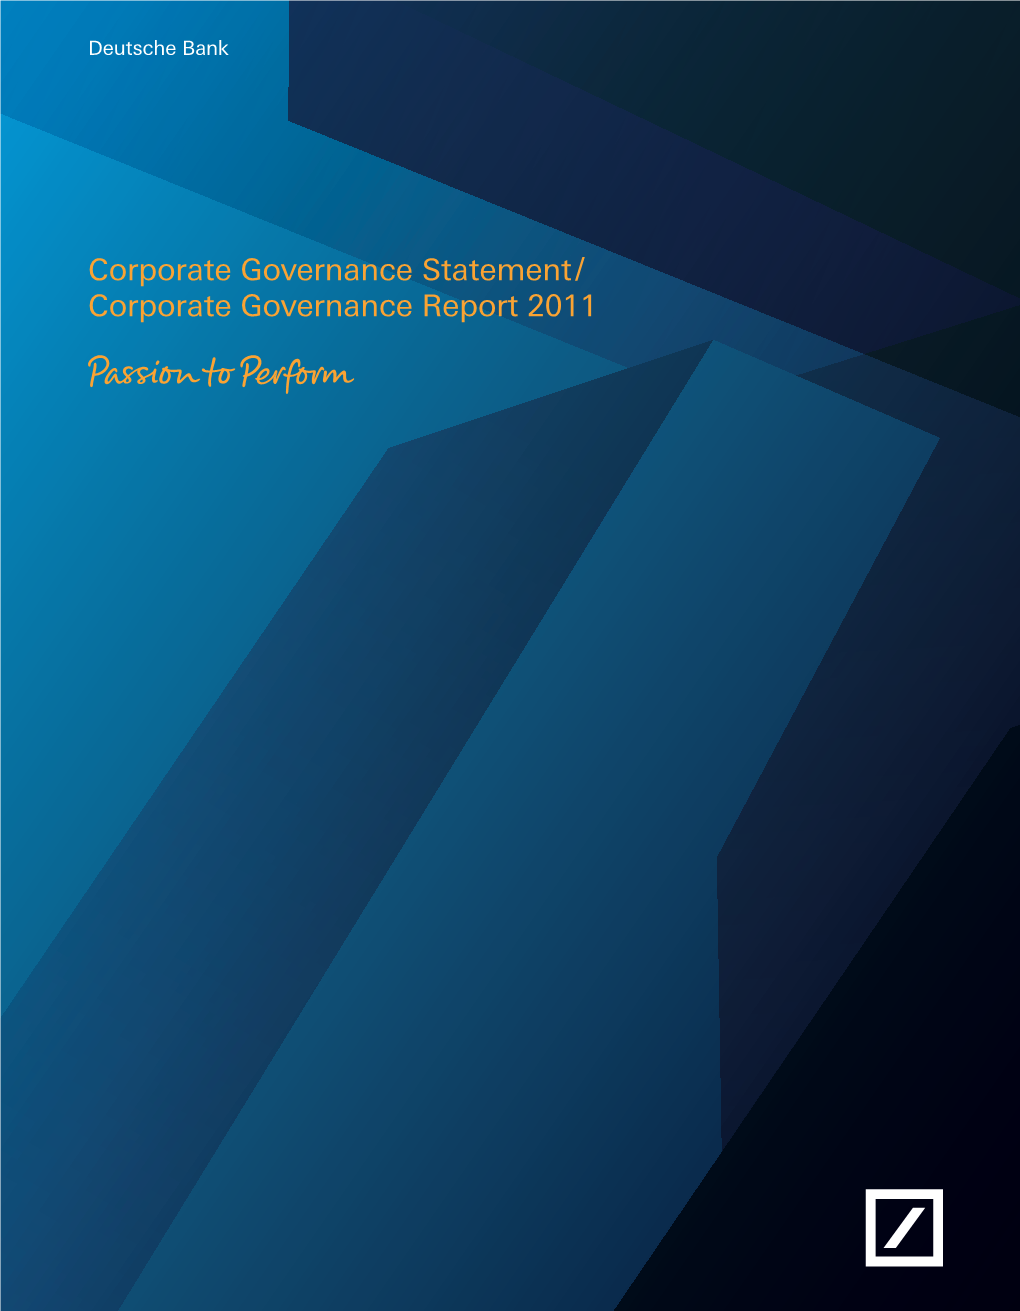 Corporate Governance Statement / Corporate Governance Report 2011